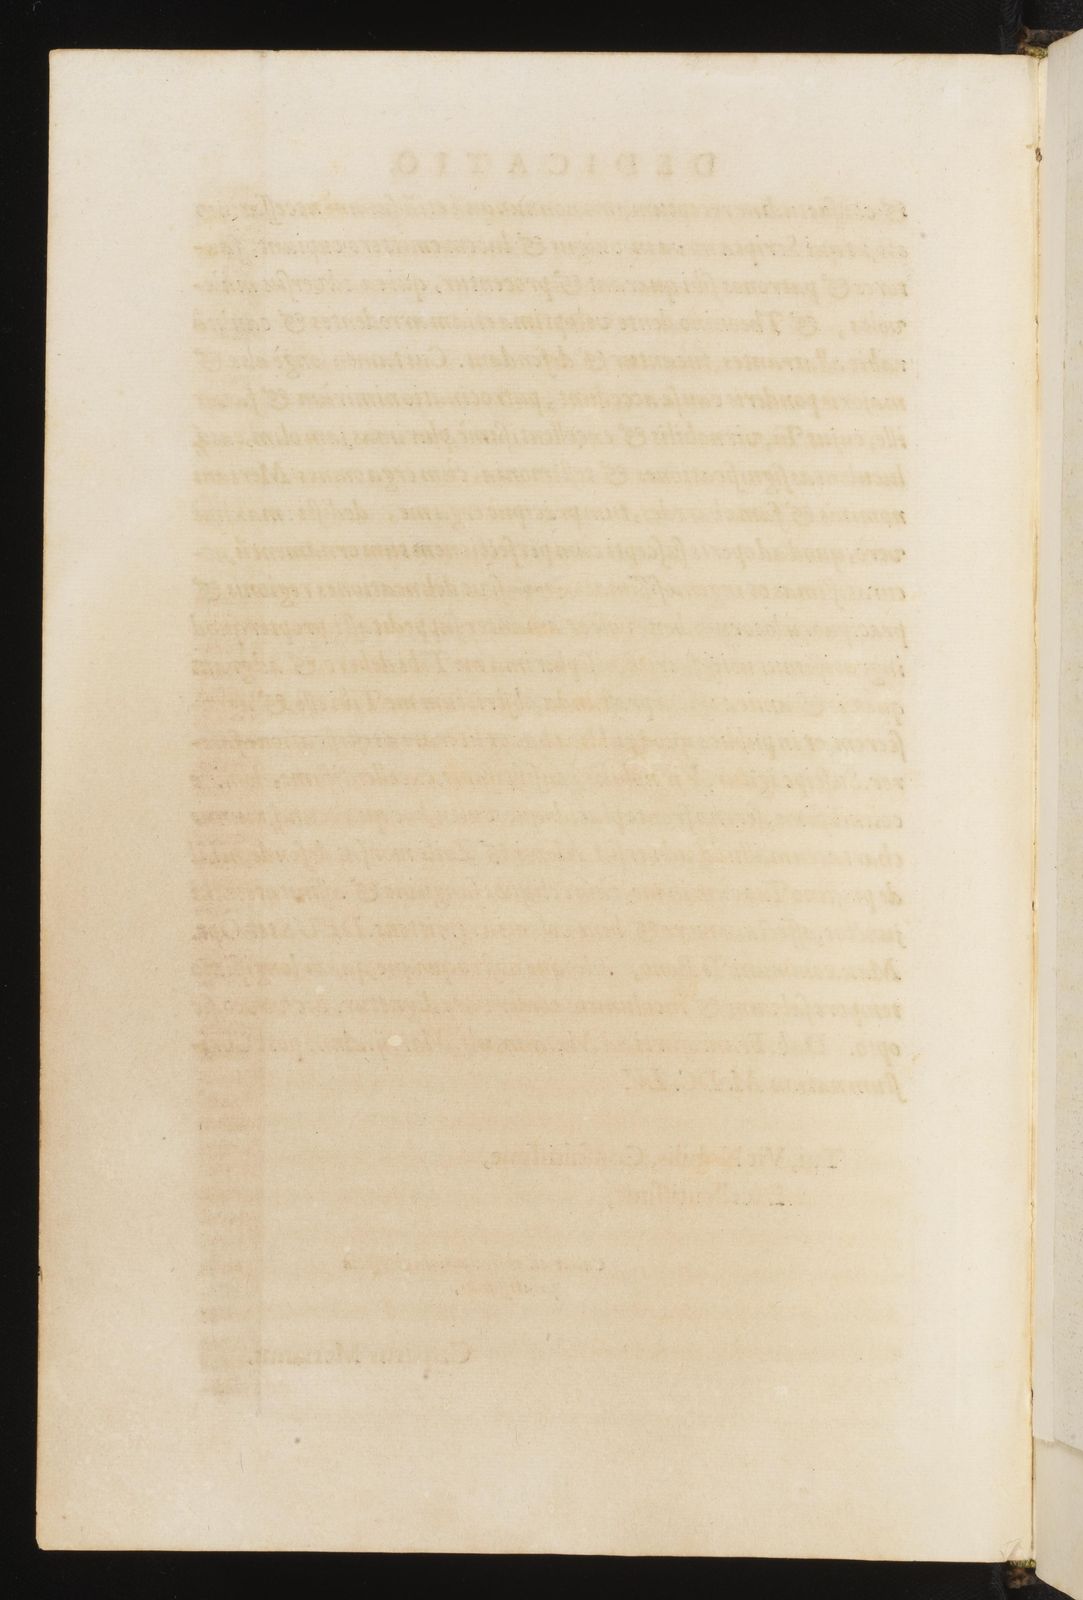 Topographia Galliae, sive descriptio et delineatio famosissimorum locorum in potentissimo regno Galliae ... / Martin Zeiller ; cura ... Caspari Meriani